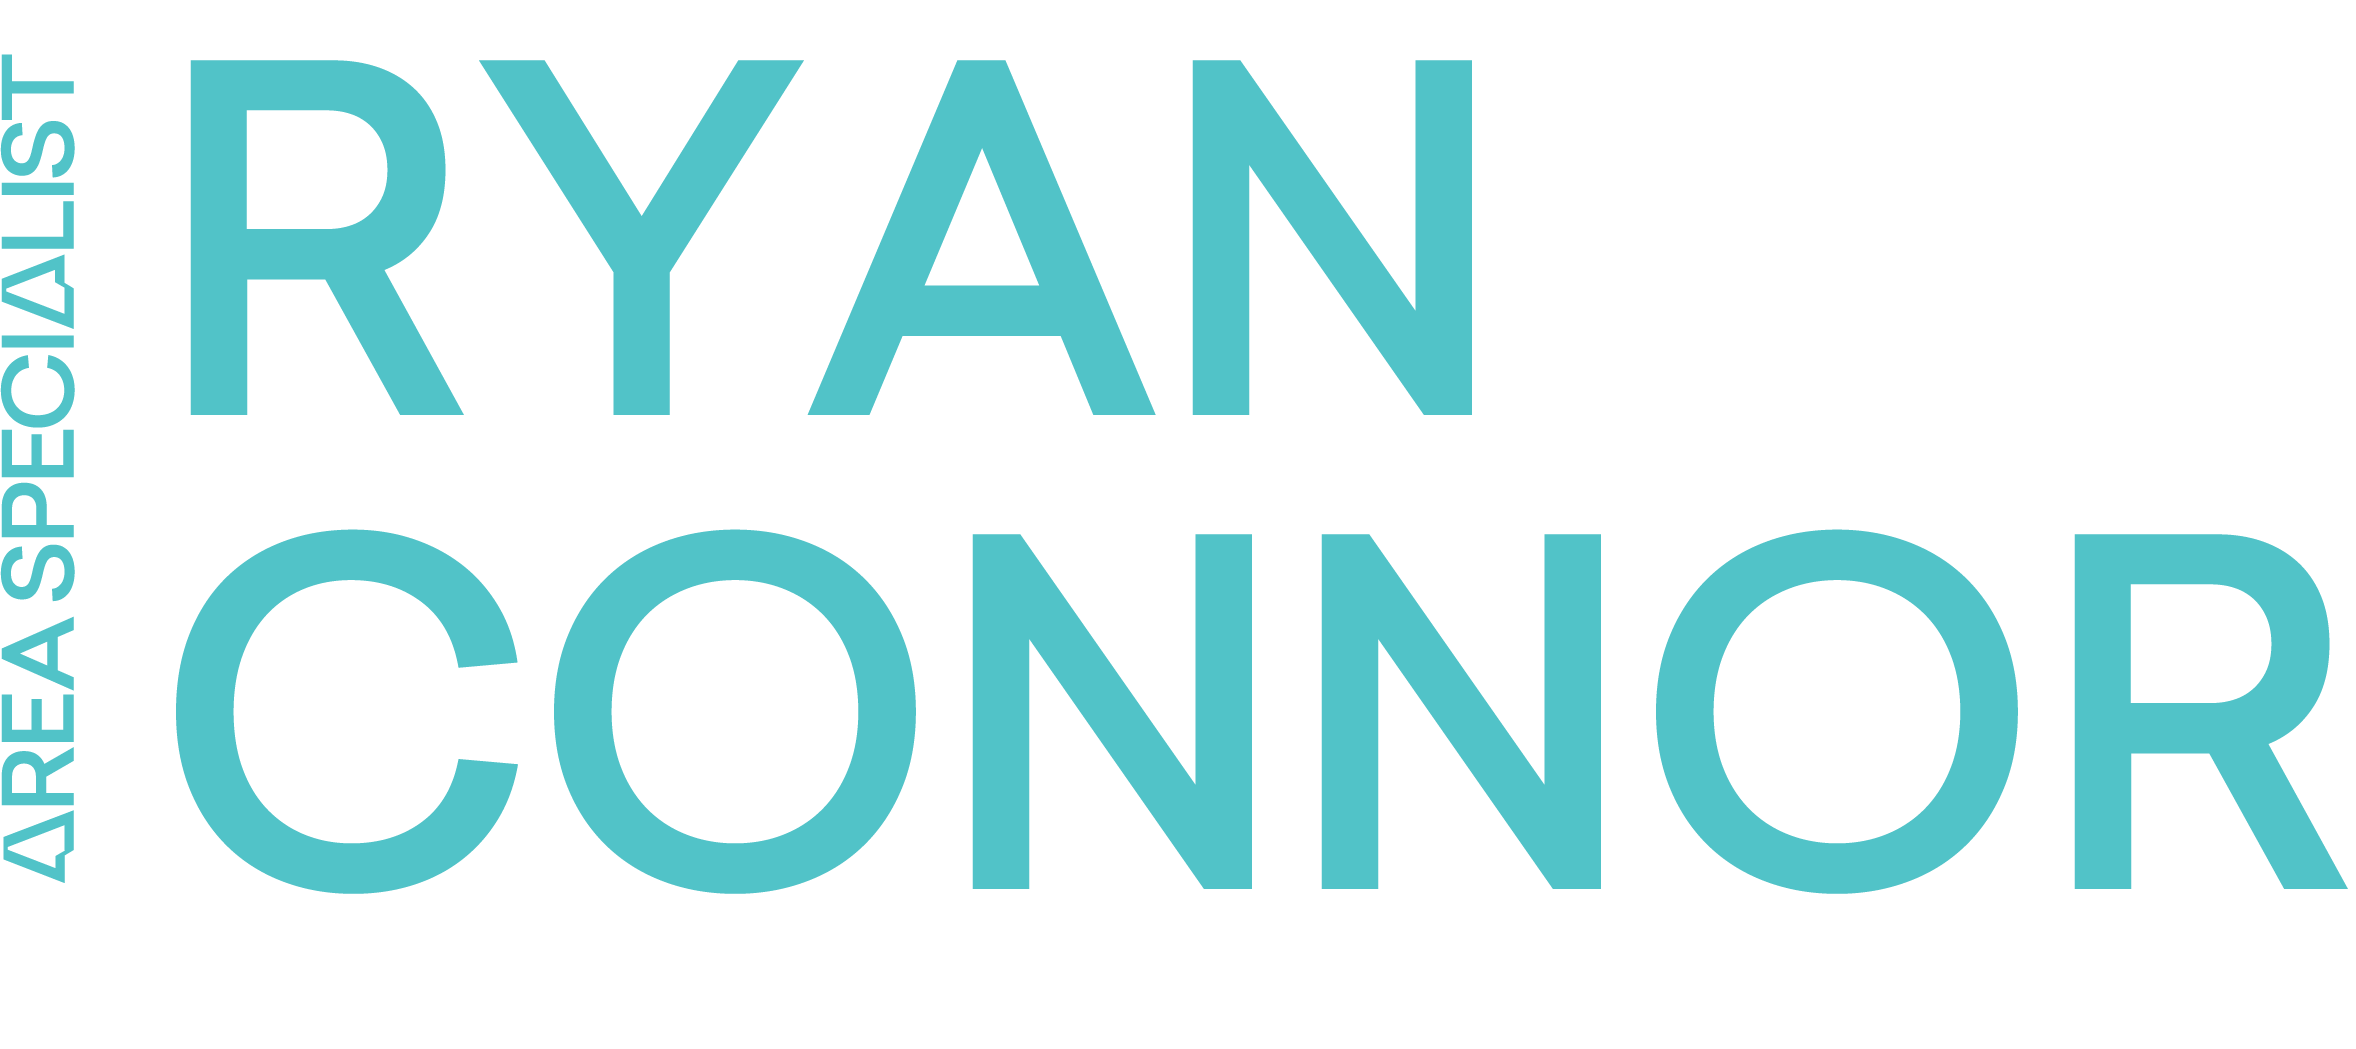 Ryan Connor